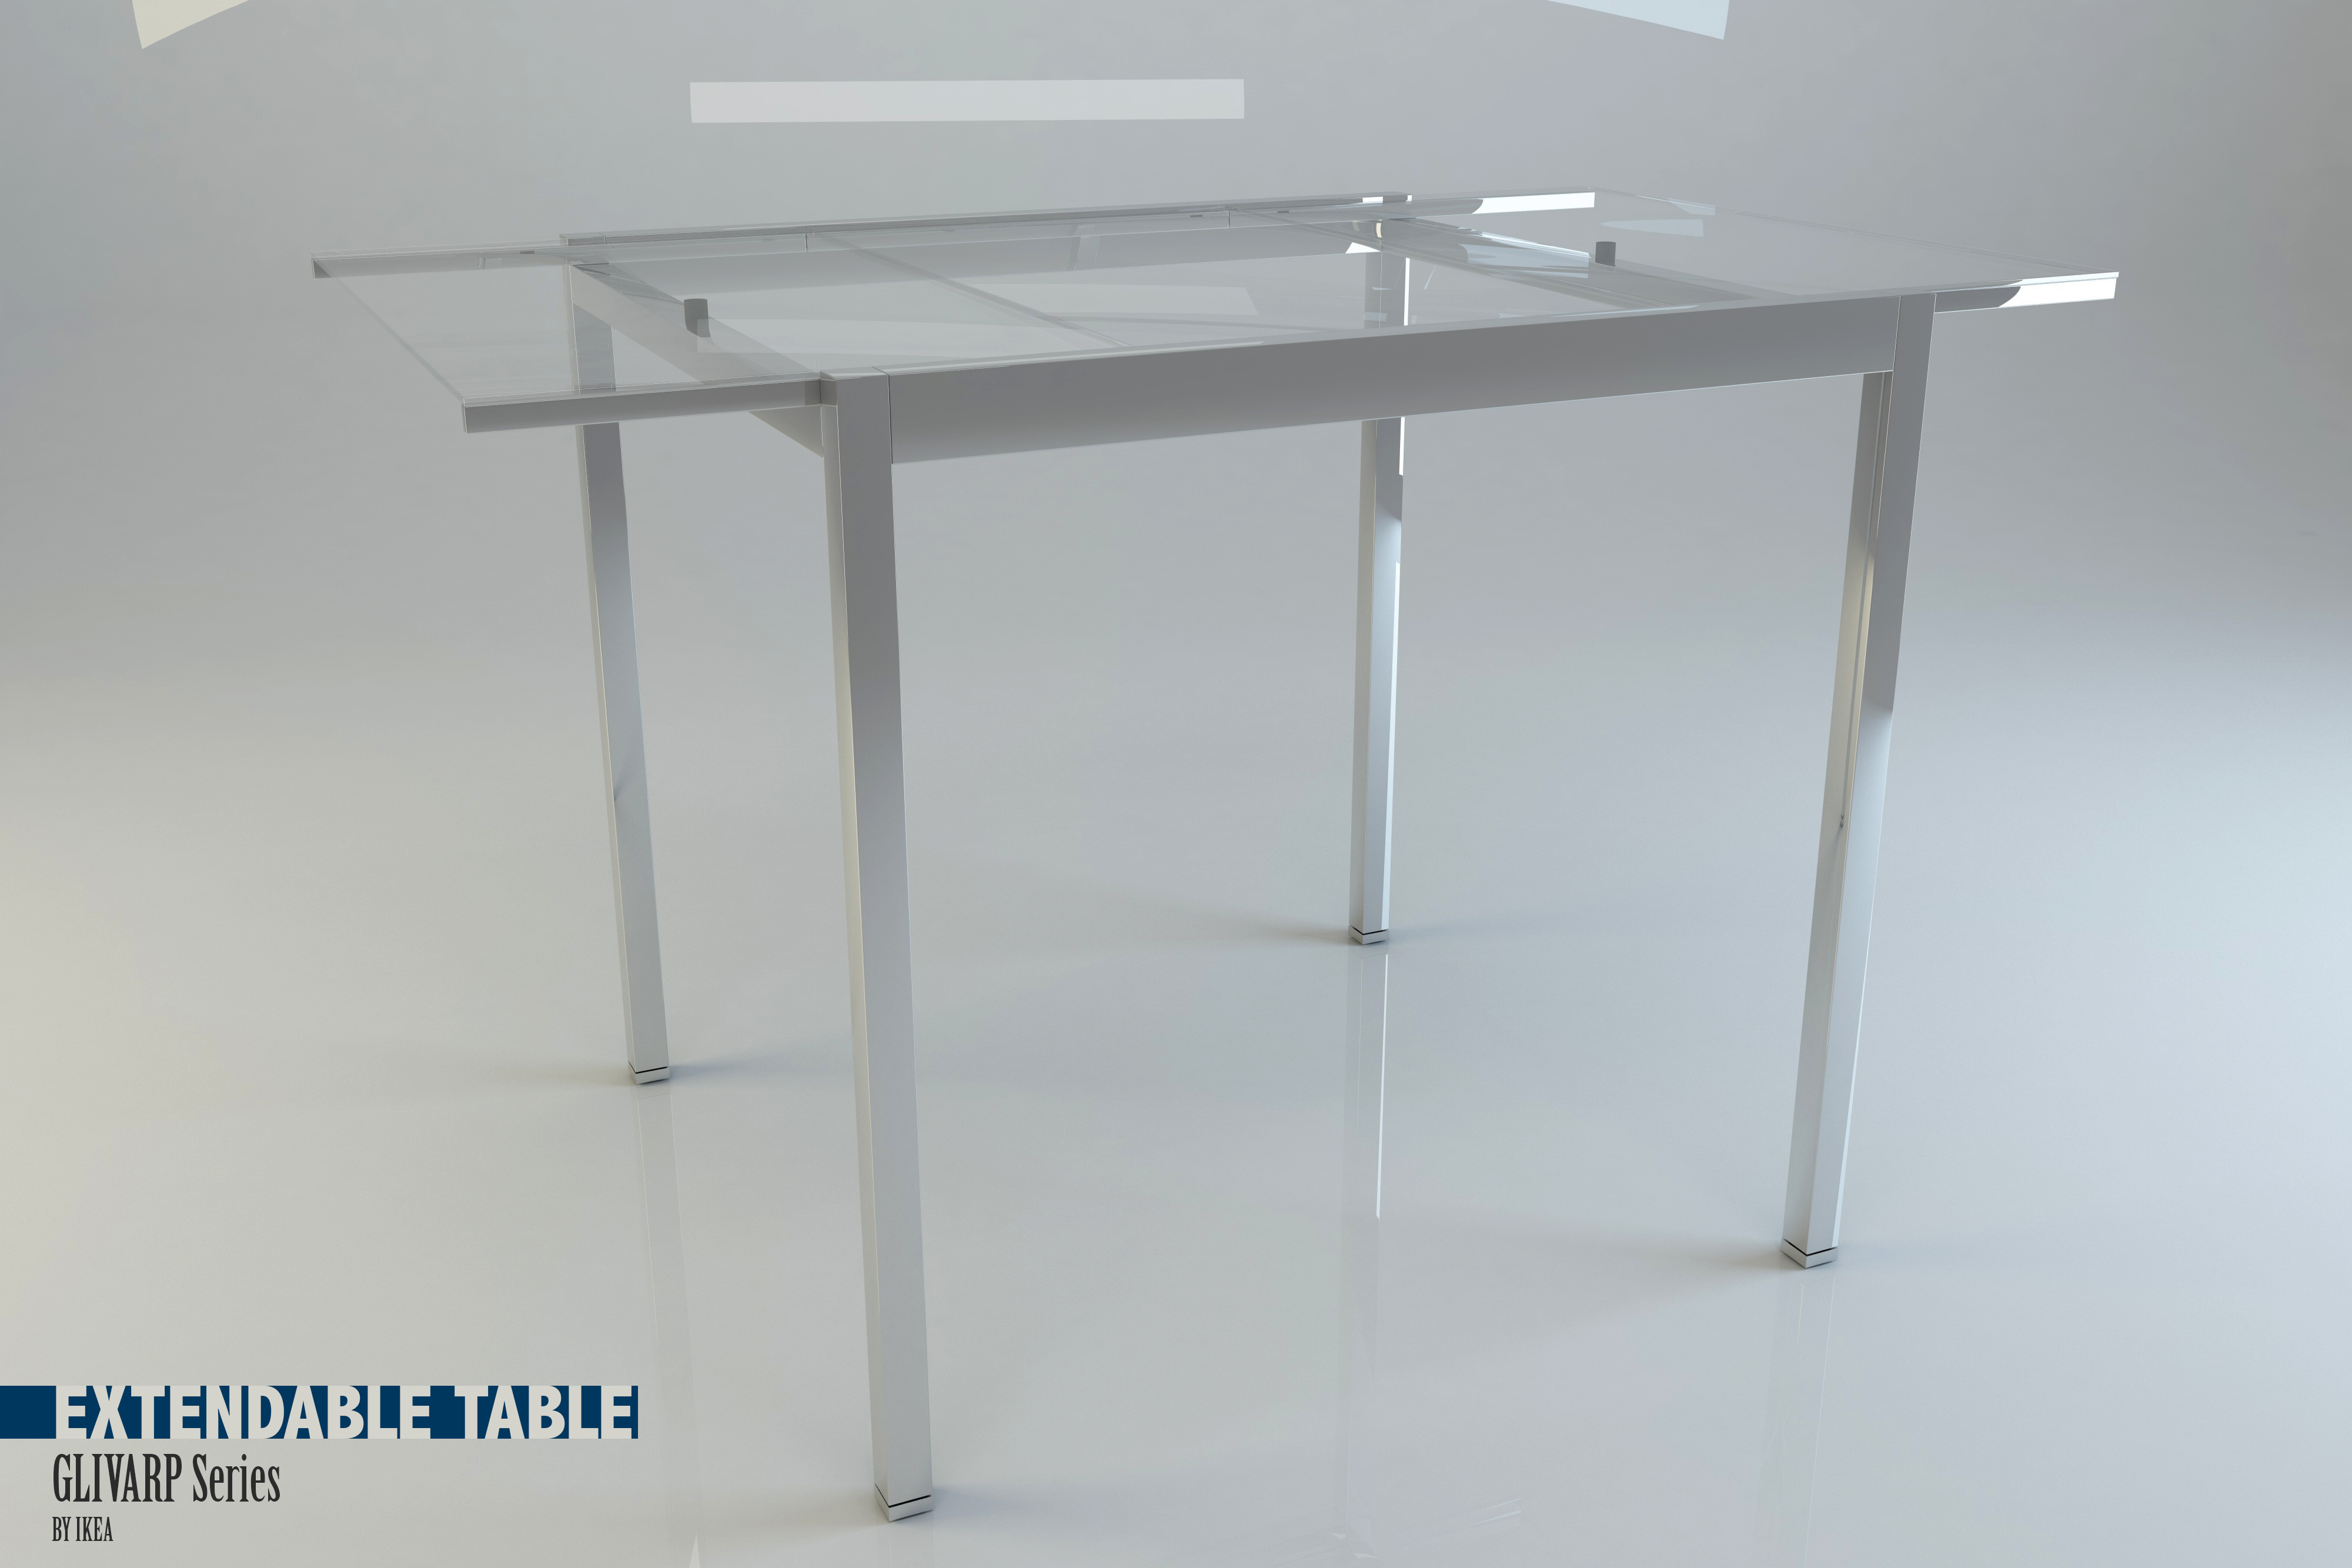 Table Glivarp Ikea Model Turbosquid 1169993